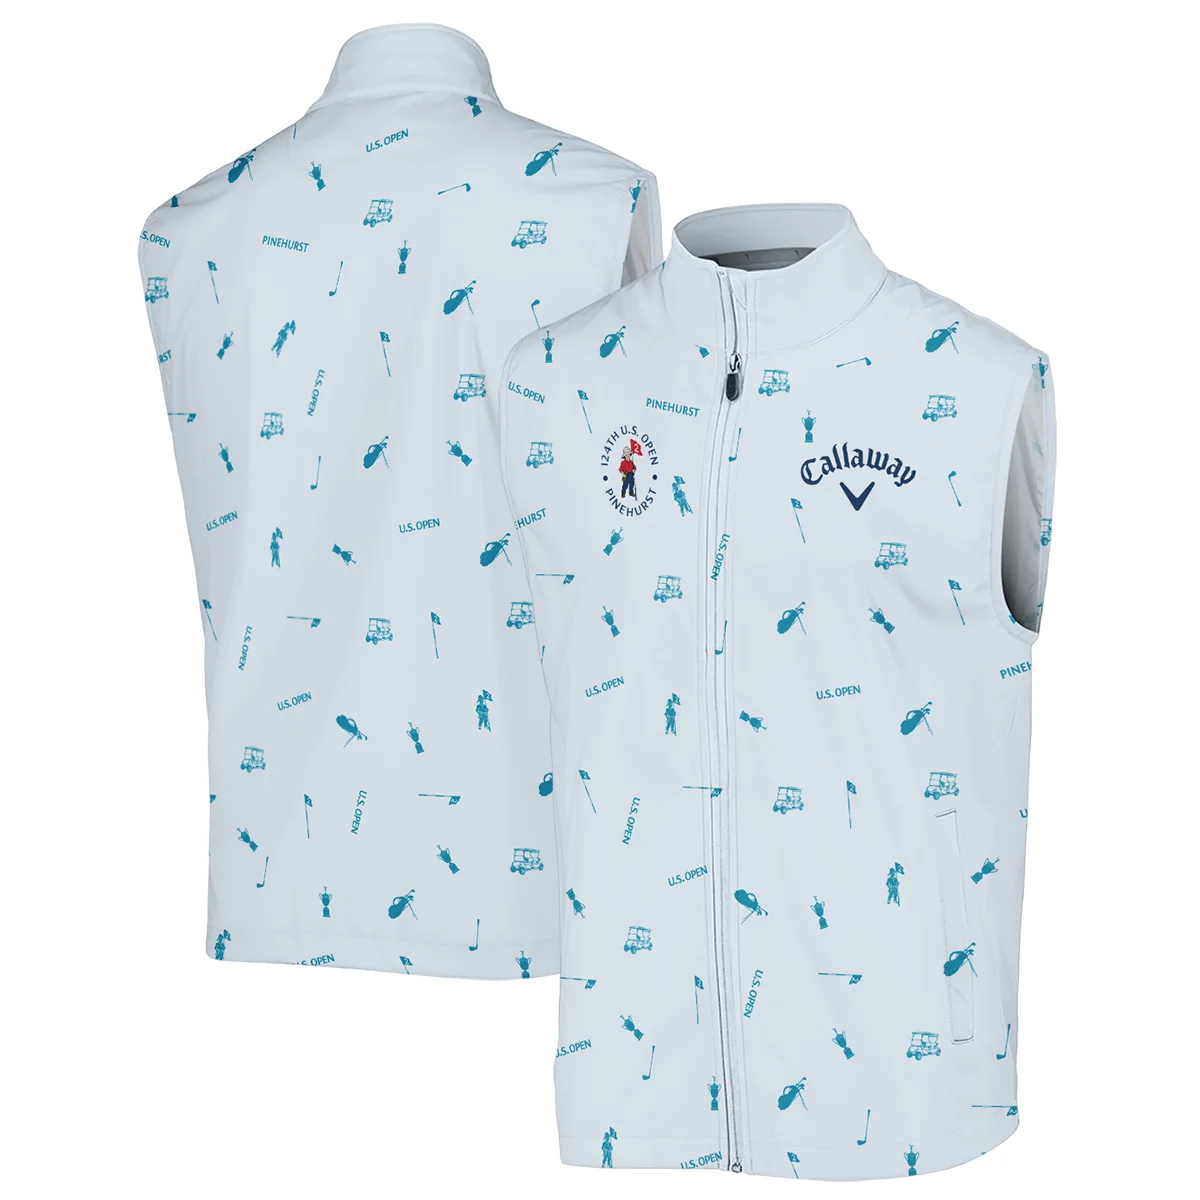 Callaway 124th U.S. Open Pinehurst Sleeveless Jacket Light Blue Pastel Golf Pattern All Over Print Sleeveless Jacket